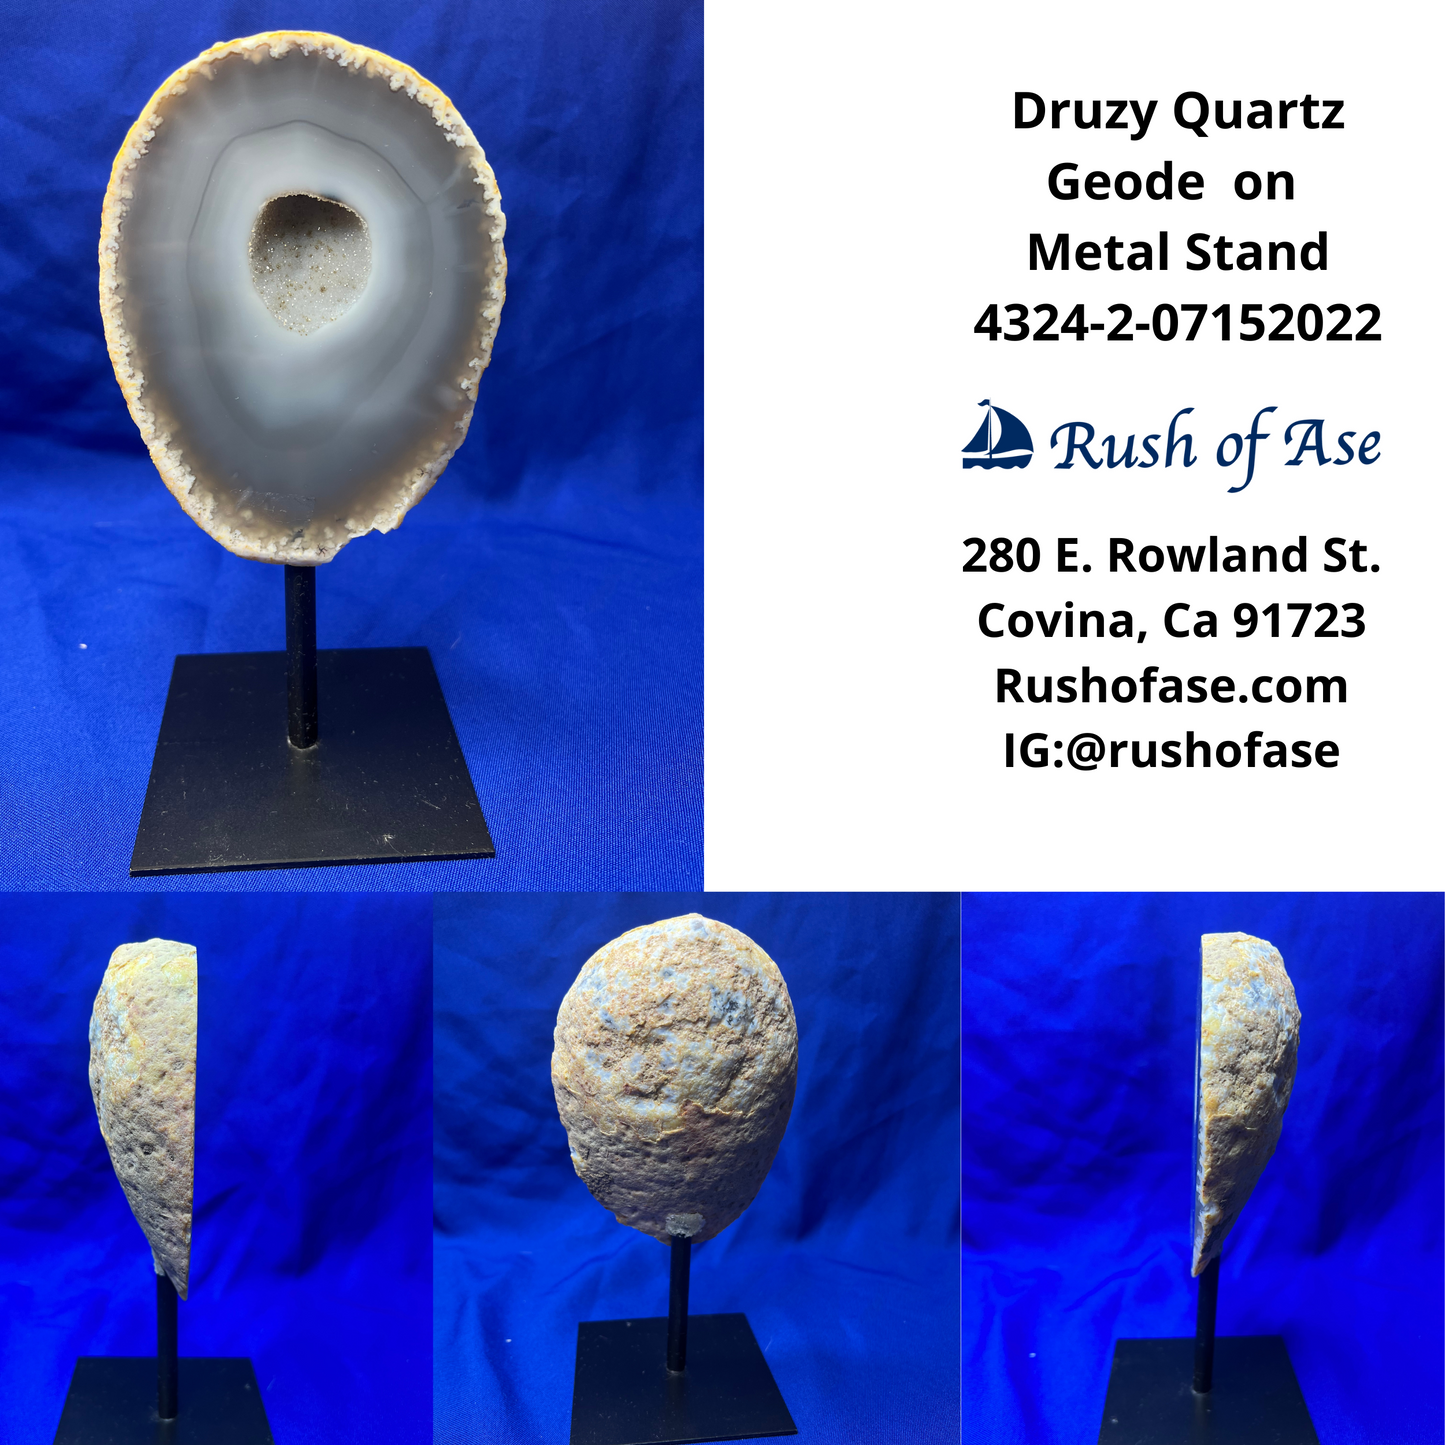 Stones | Druzy Quartz Geodes on Metal Stand